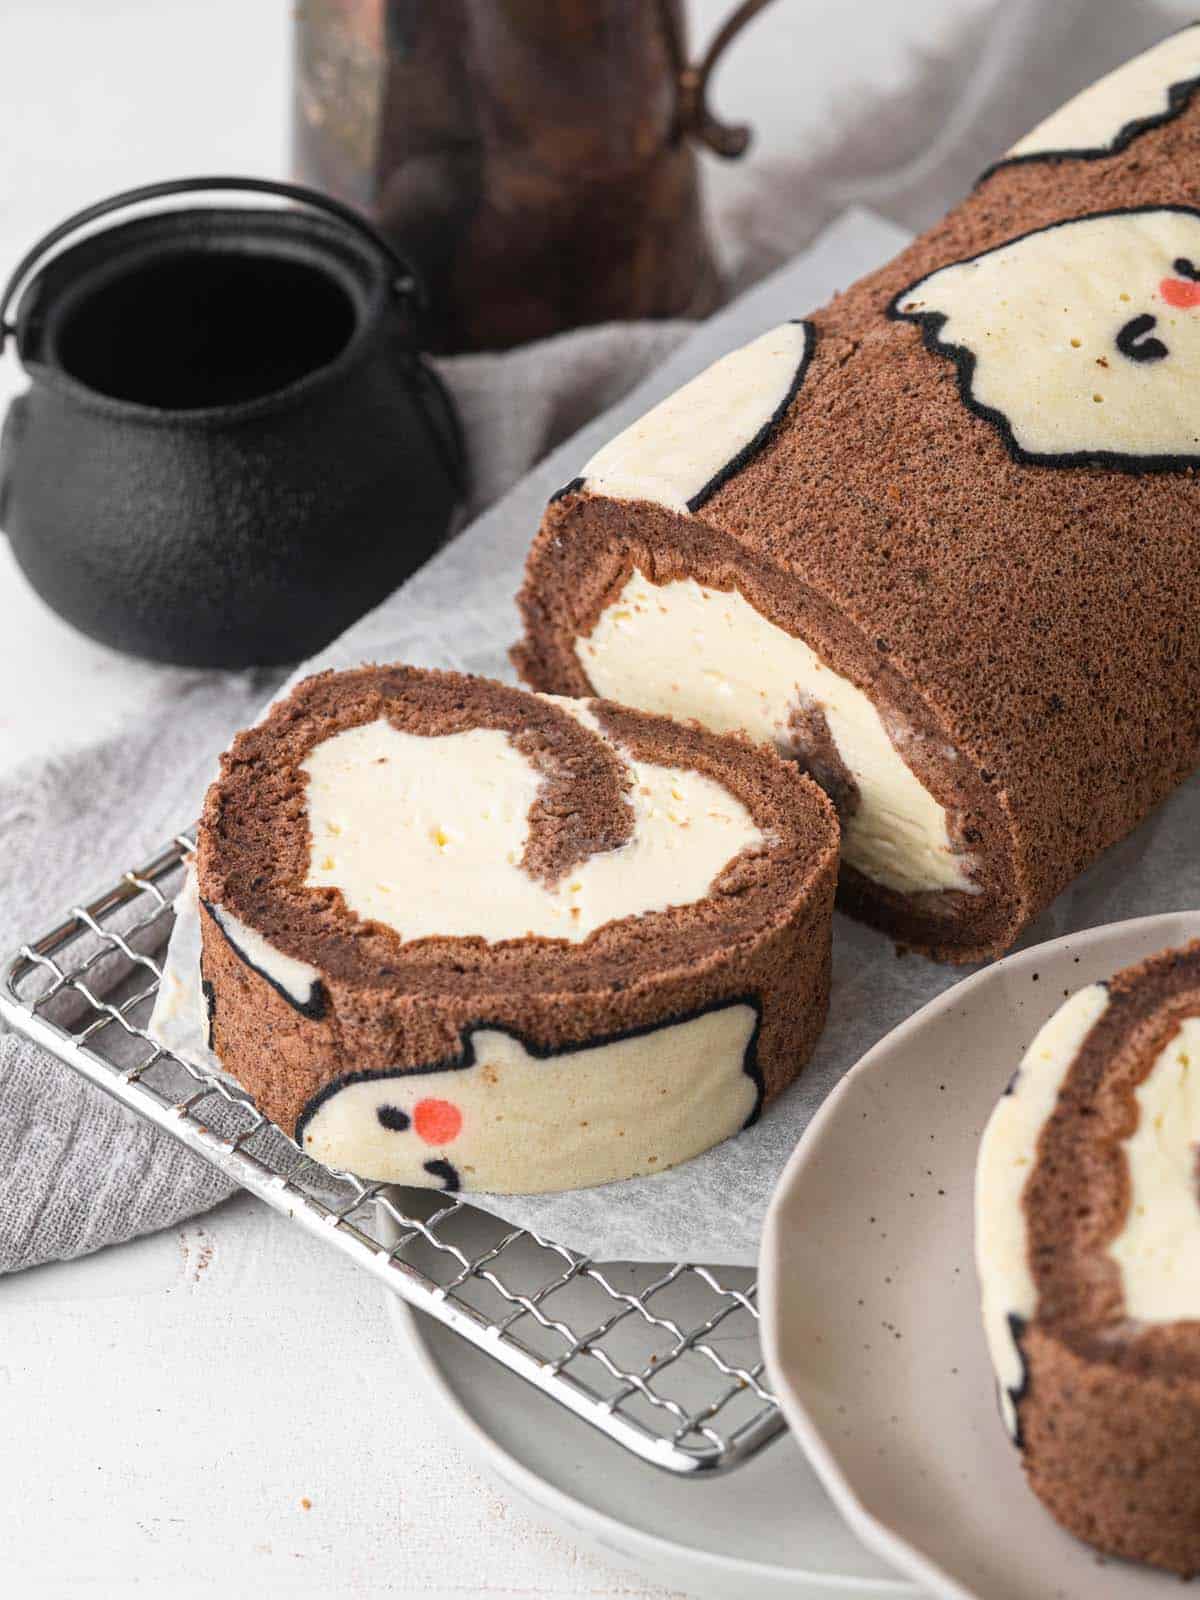 Halloween ghost chocolate swiss roll cake with vanilla whipped cream